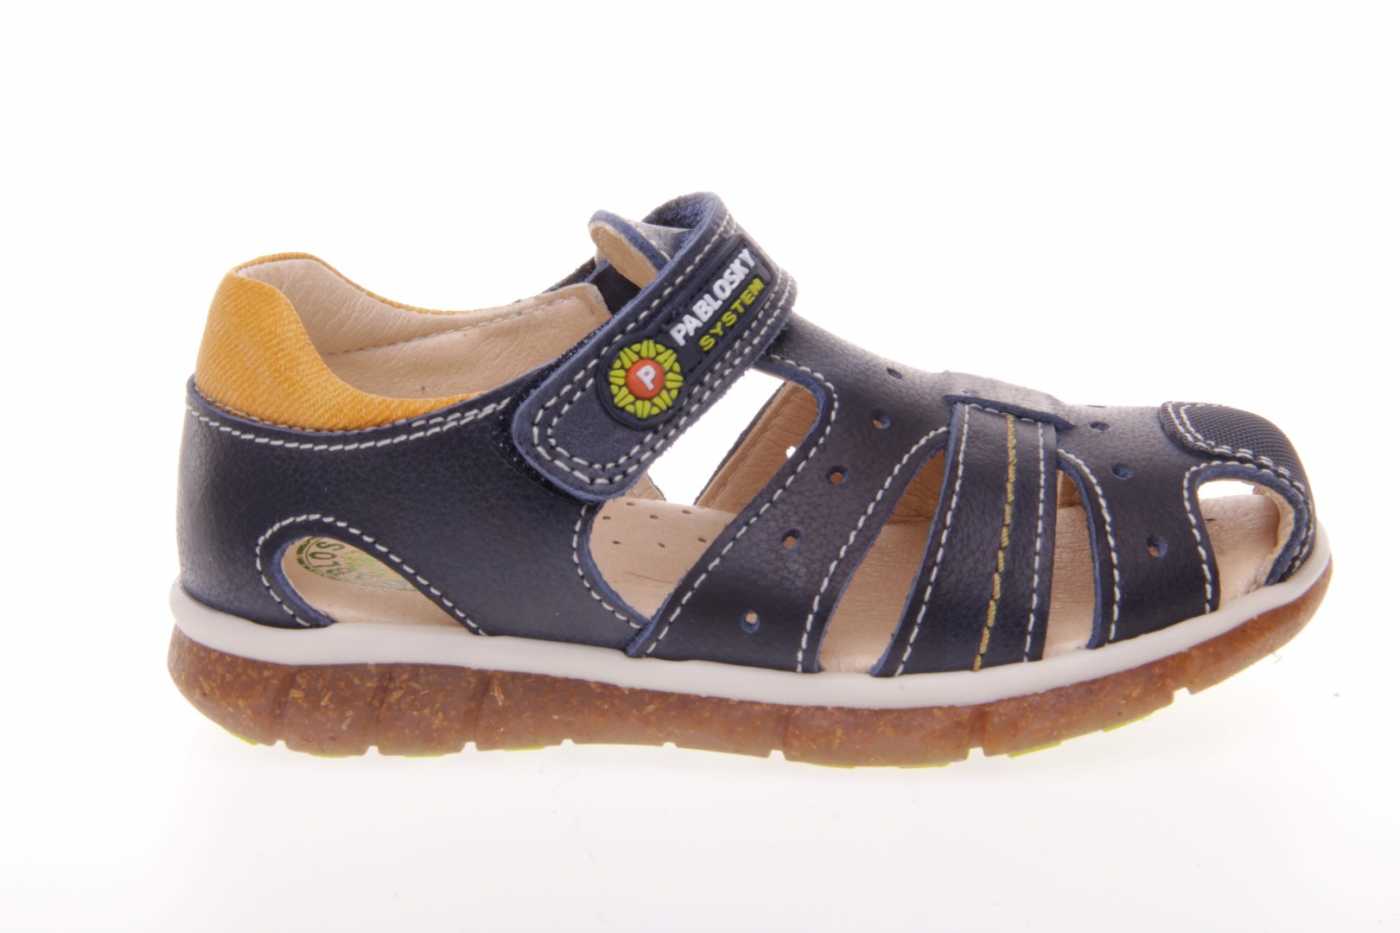 Comprar zapato PABLOSKY para JOVEN NIÑO estilo SANDALIA AZUL MARINO PIEL